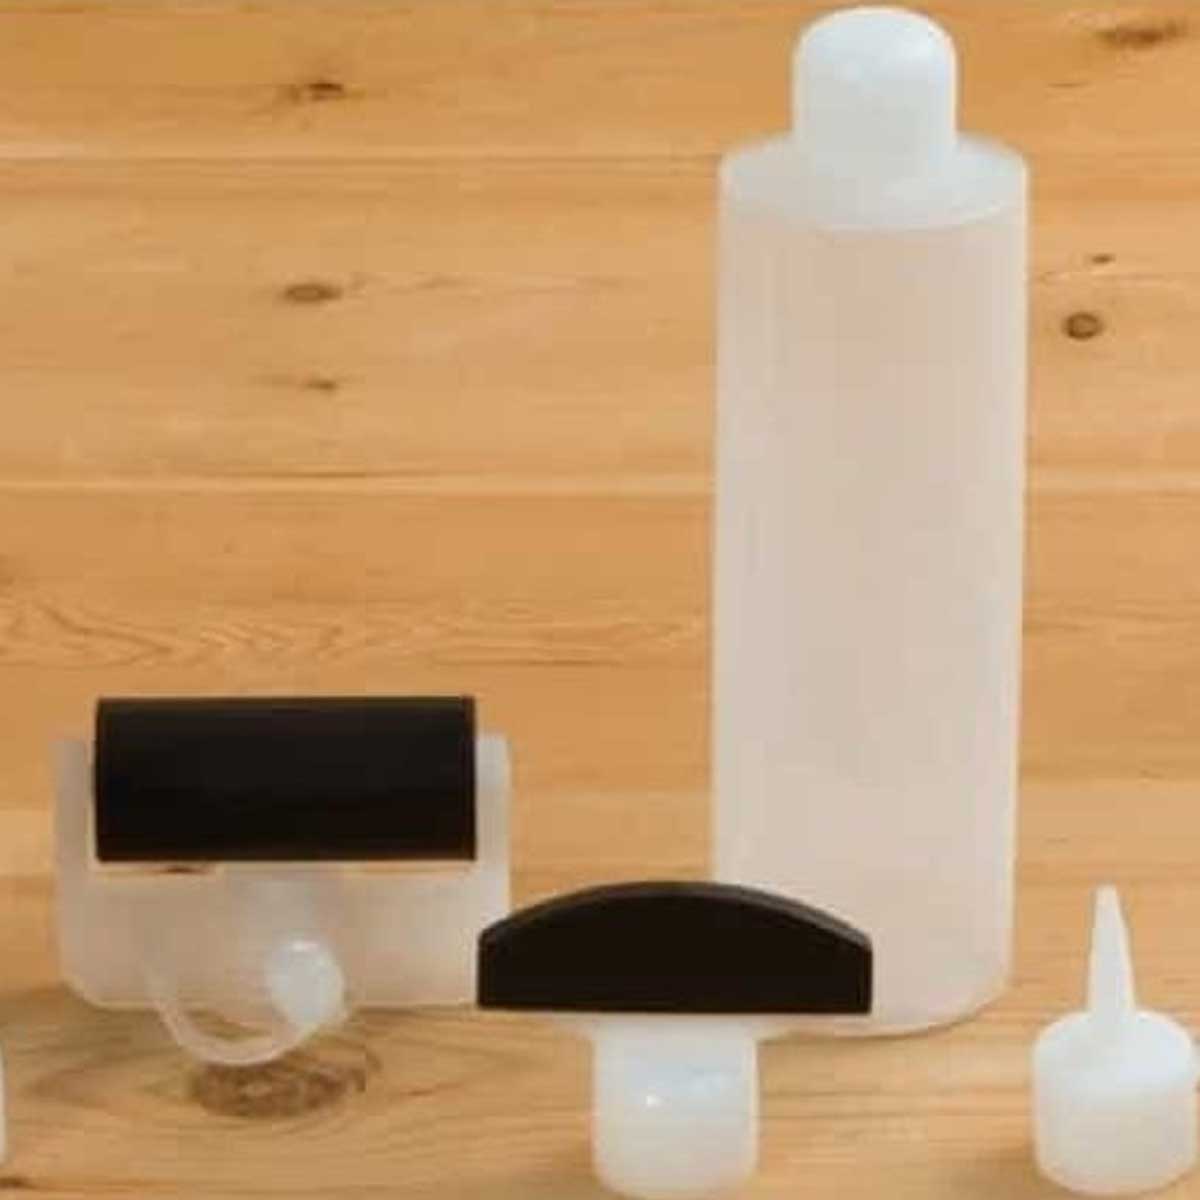 Glue Bottle Applicator Set Manufacturers, Suppliers in Madhya Pradesh